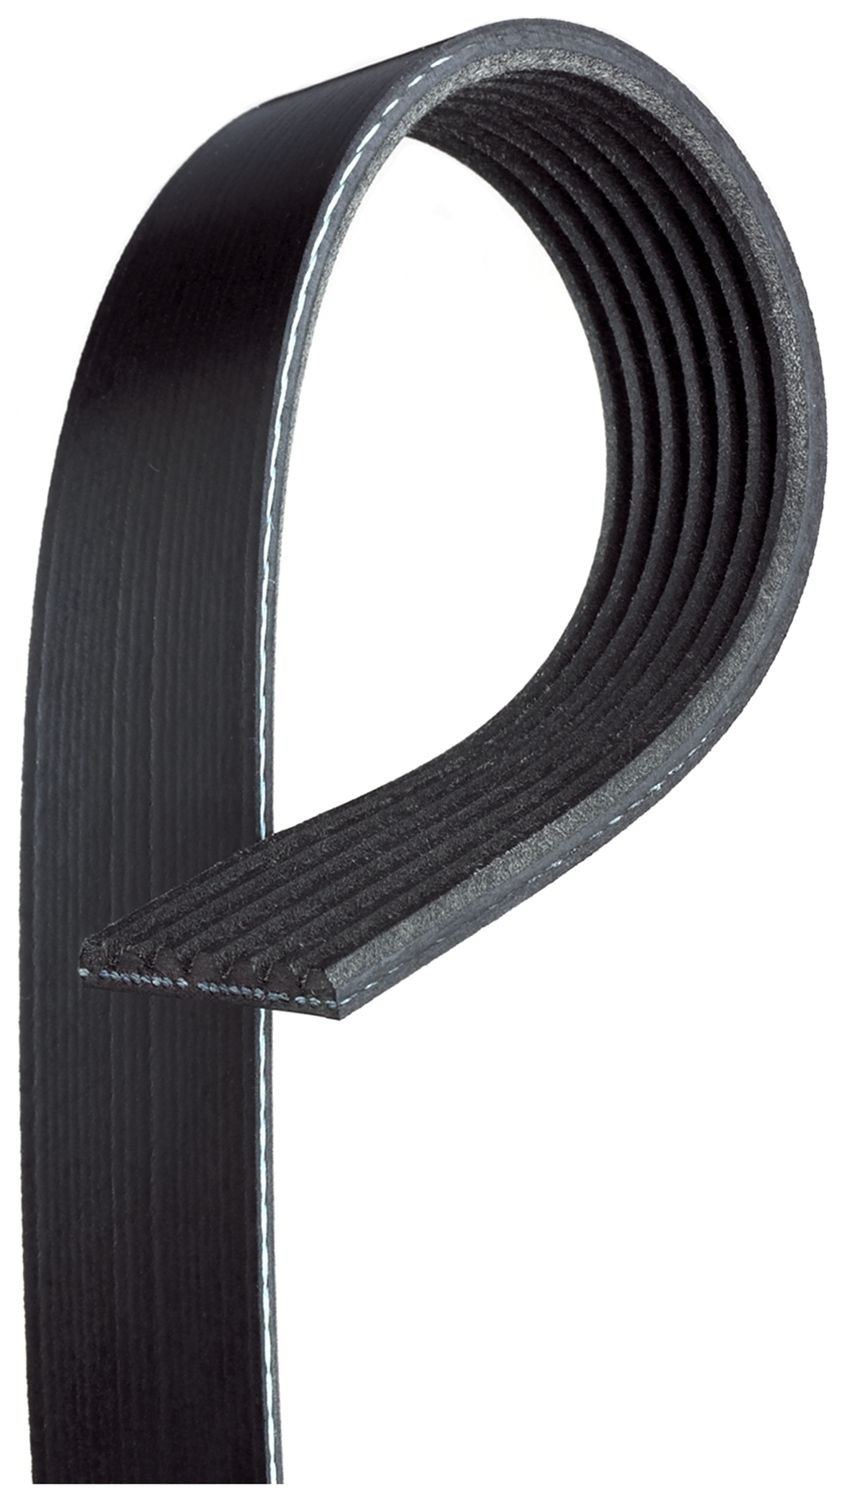 GATES 7PK2045 Serpentine belt 2045mm, 7, G-Force™ C12™ CVT Belt